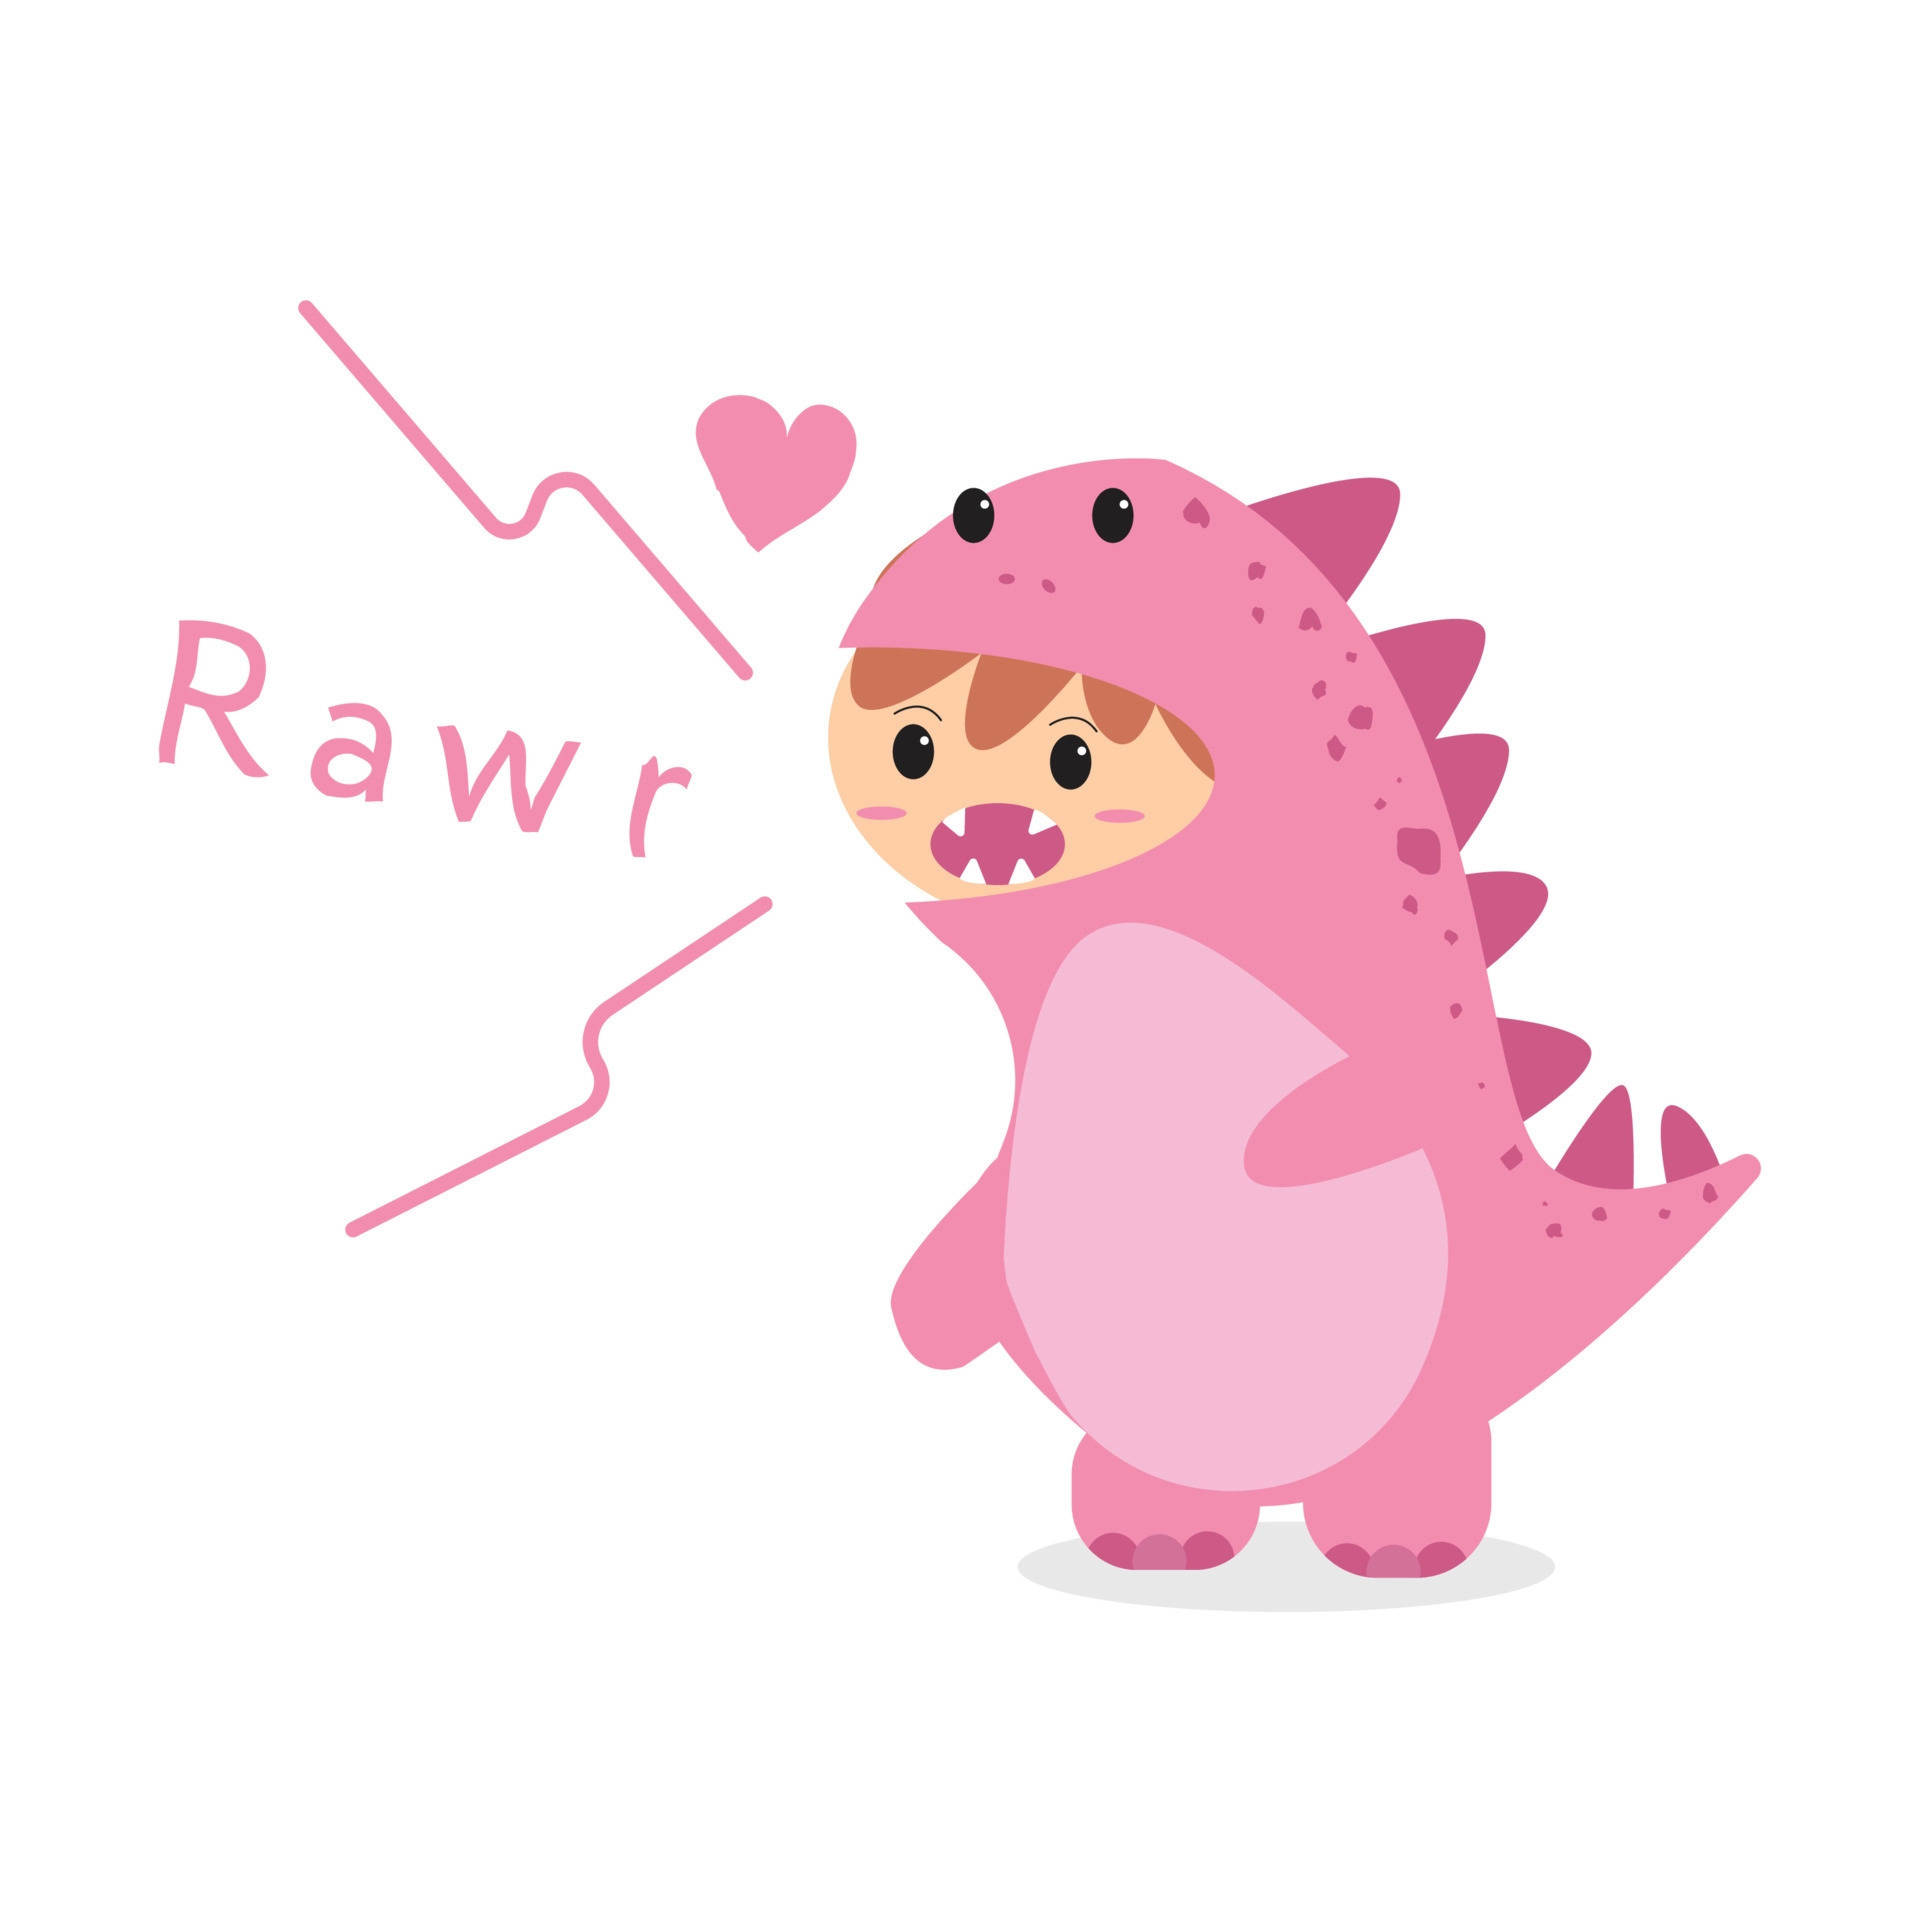 Cute Pink Dinosaur Child Rawr Costume Wallpaper